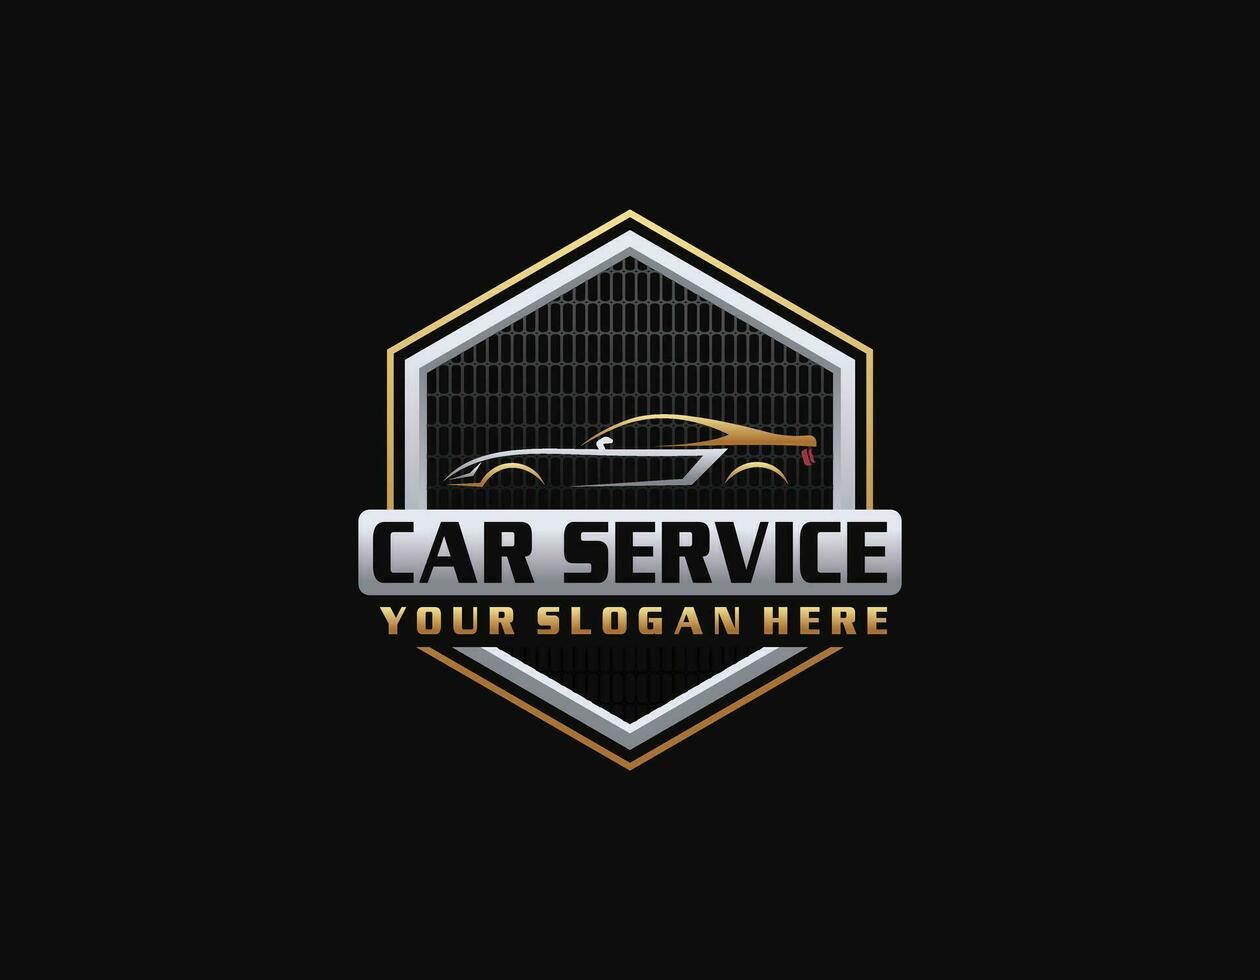 Auto car dealer logo emblem. Sports car silhouette icon vector